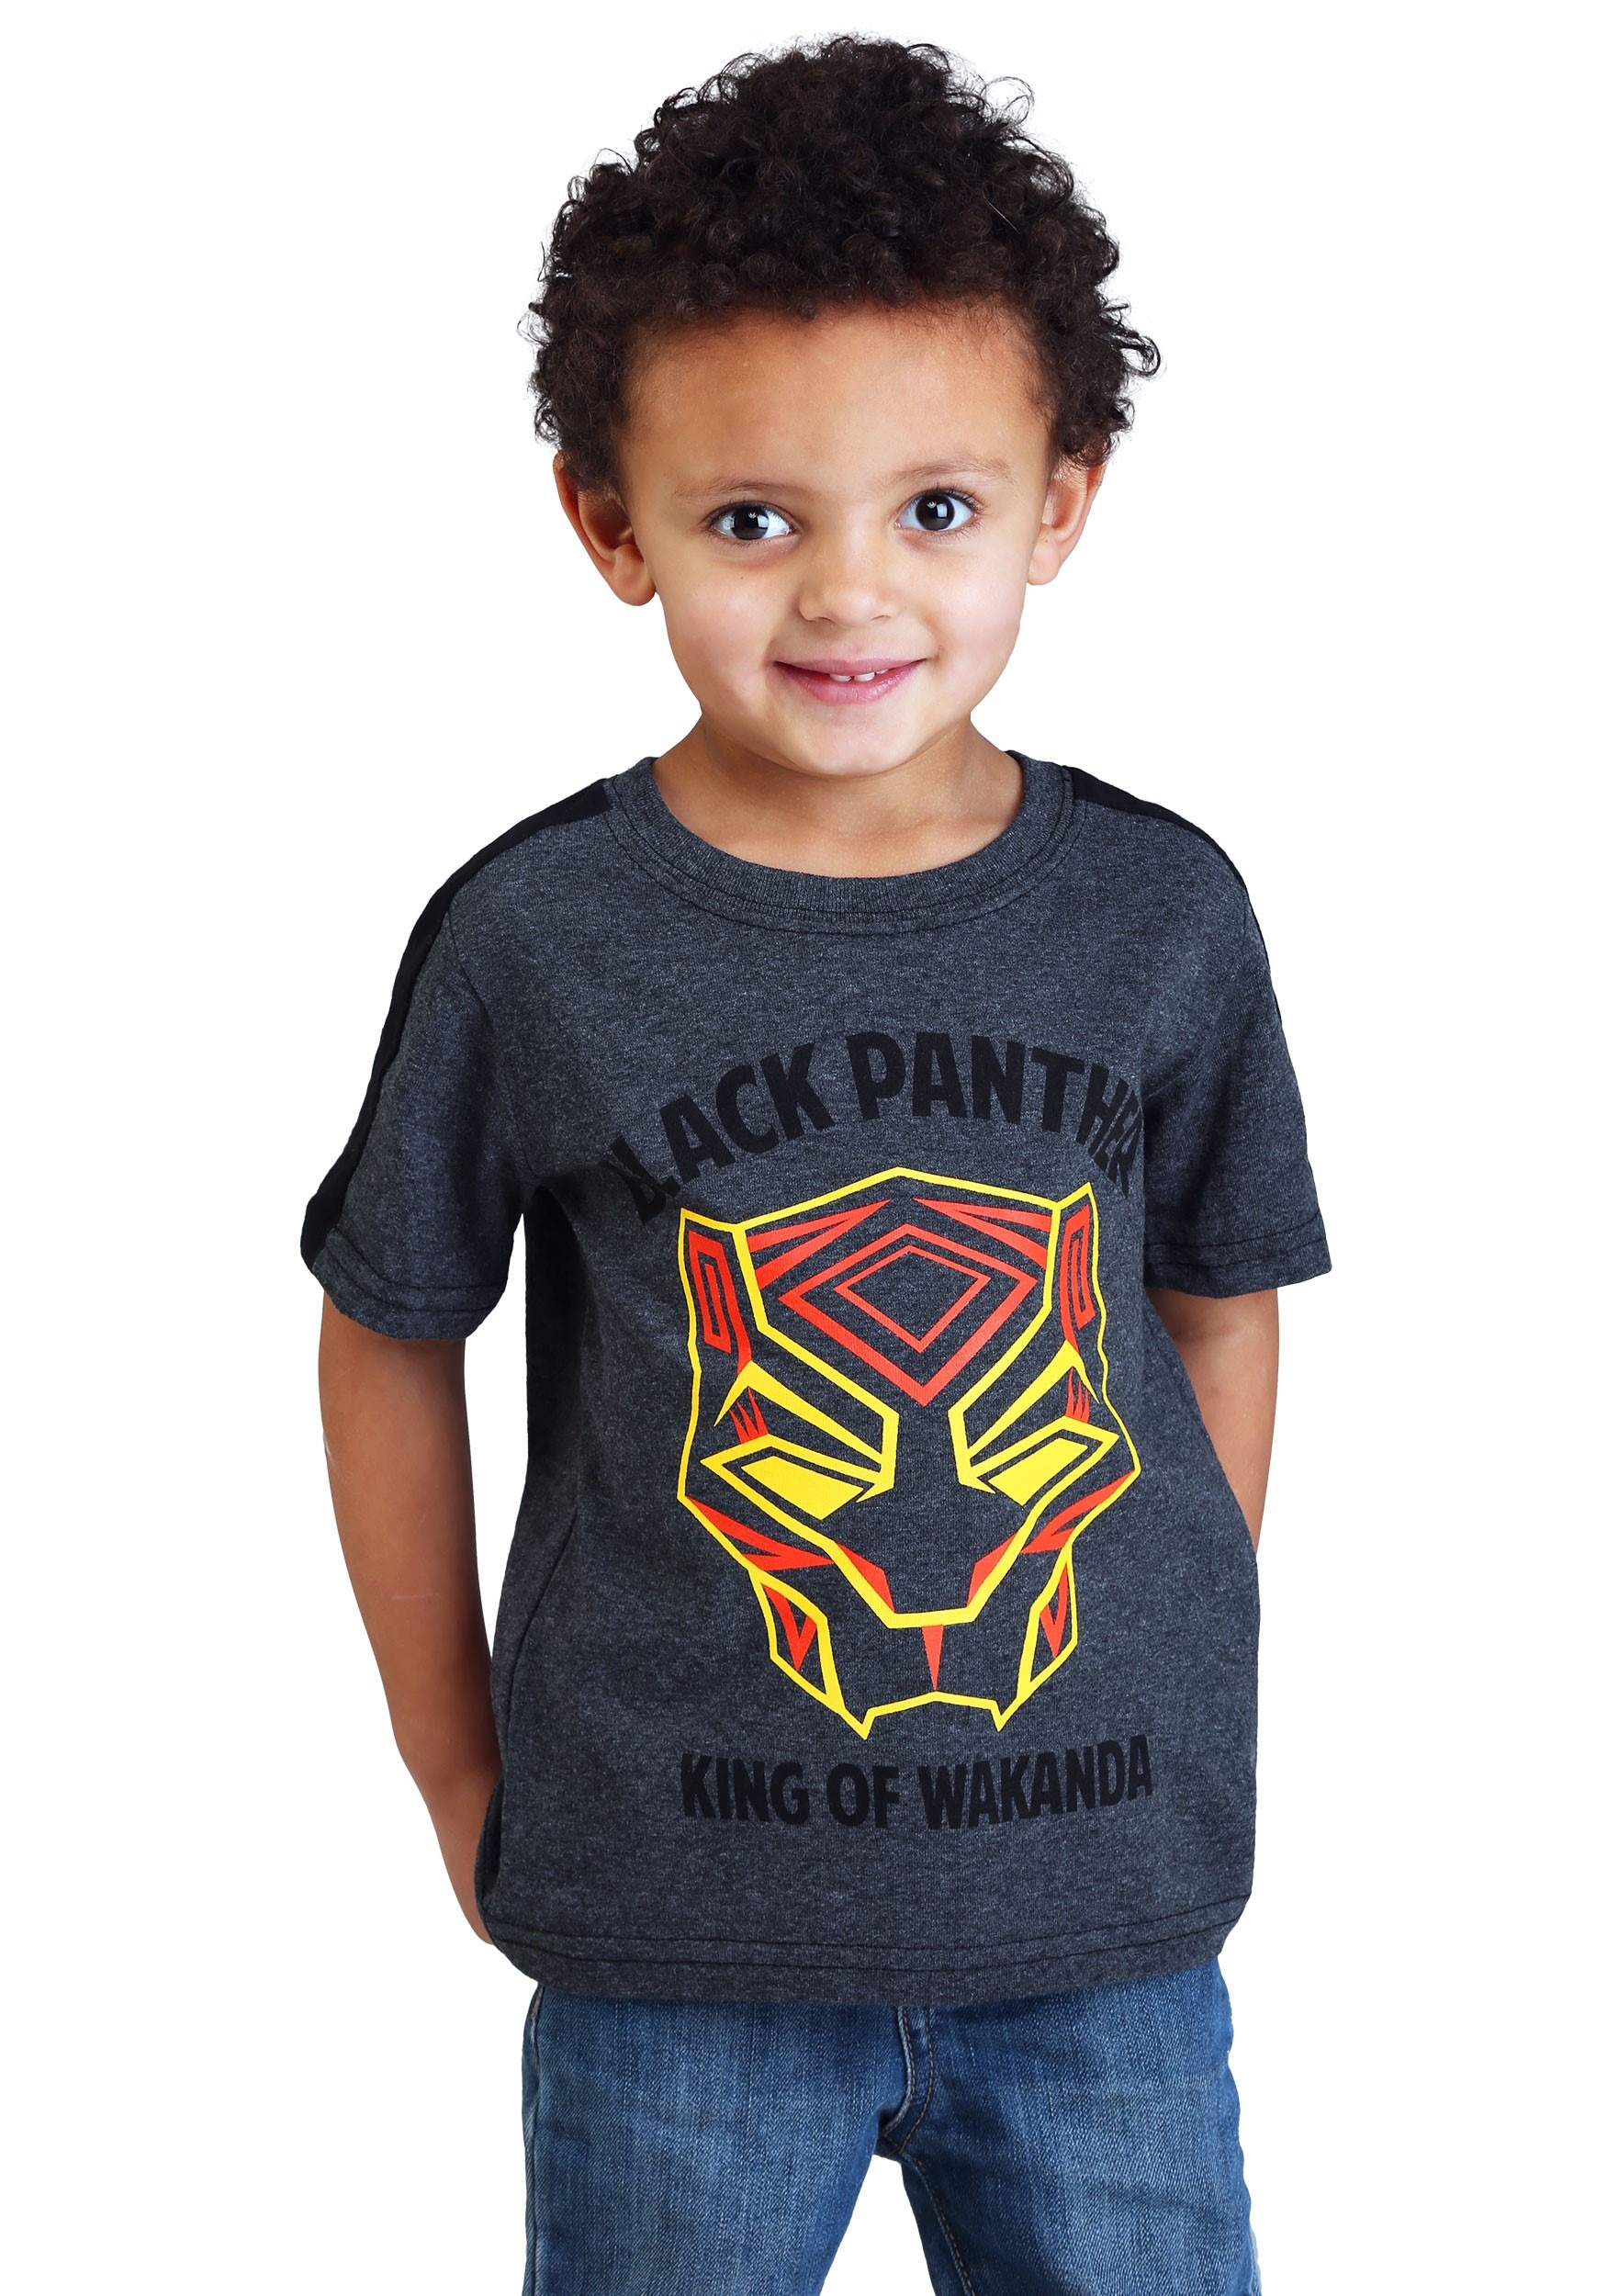 Black Panther Wakanda Boys Girls age 6mth 6yrs Cotton Gift Tee Top T-shirt 